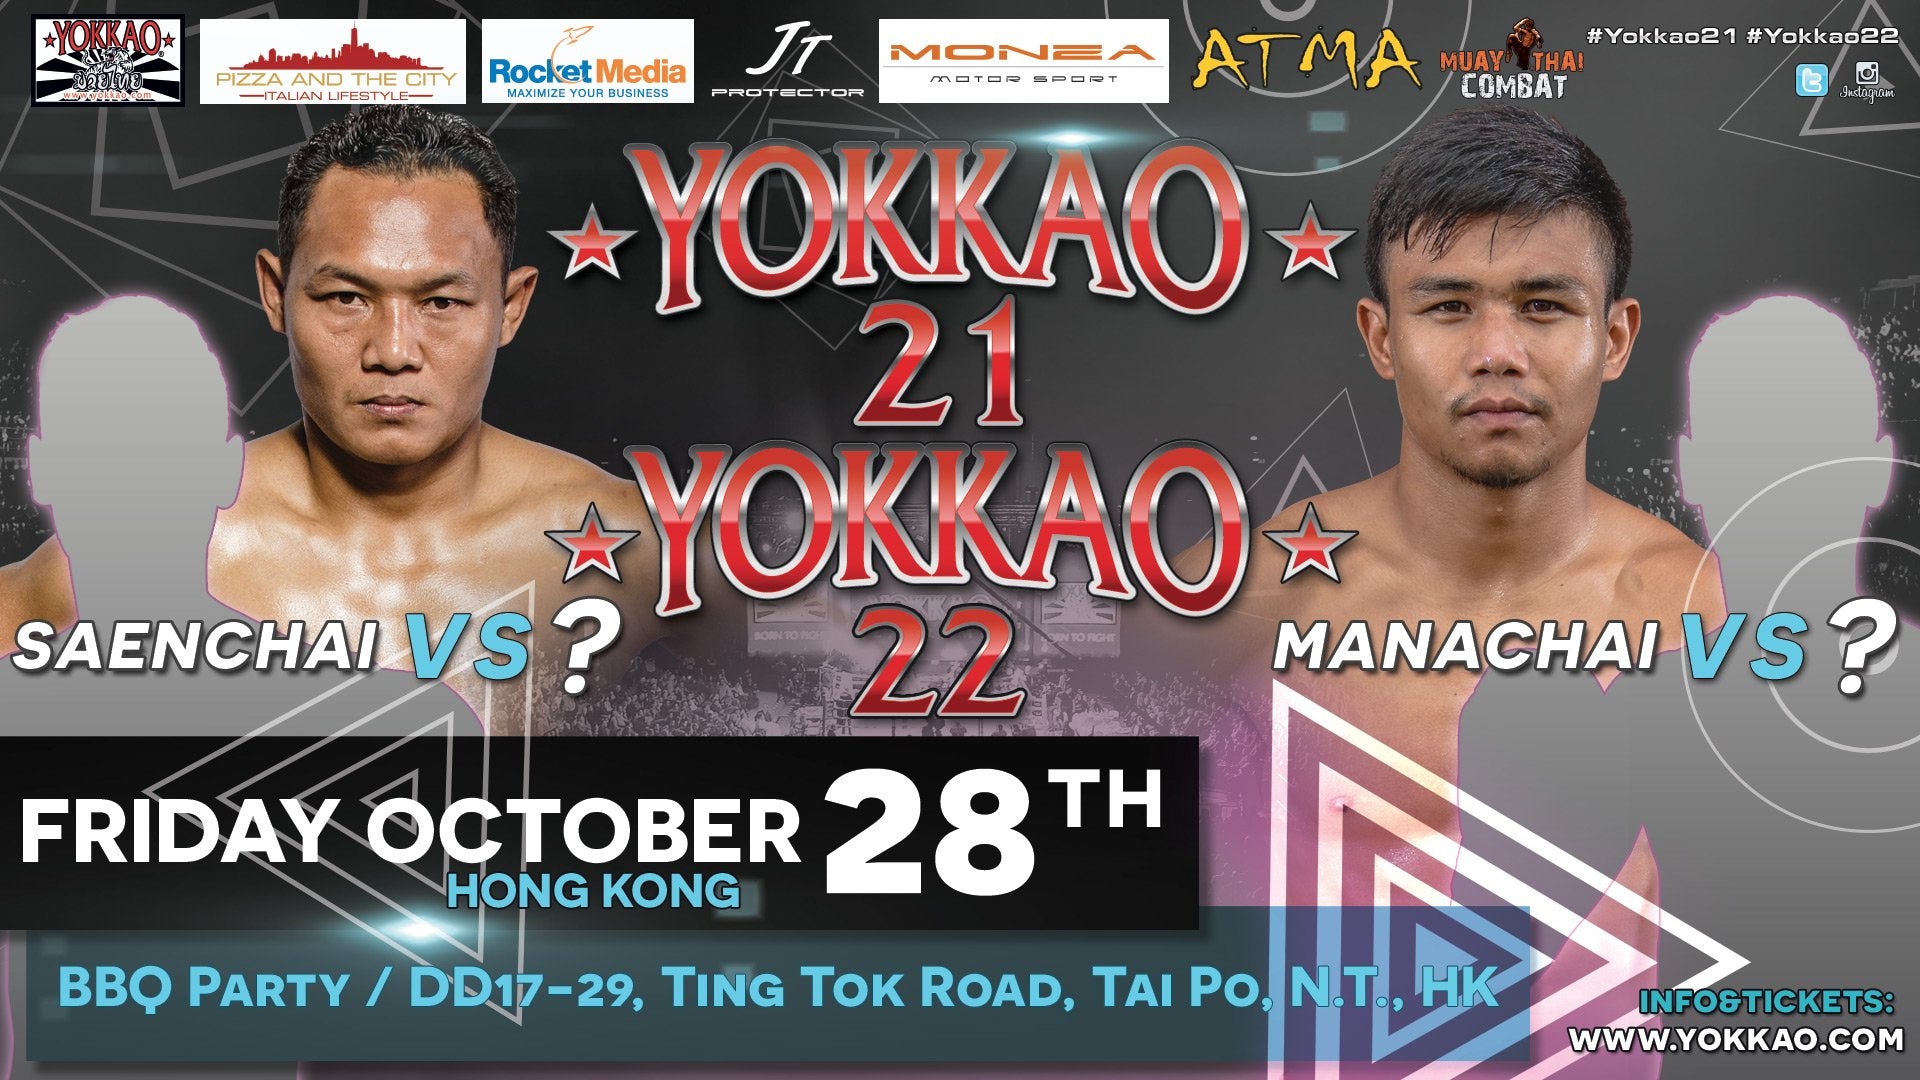 YOKKAO 21 & 22: a Hong Kong Double Treat!